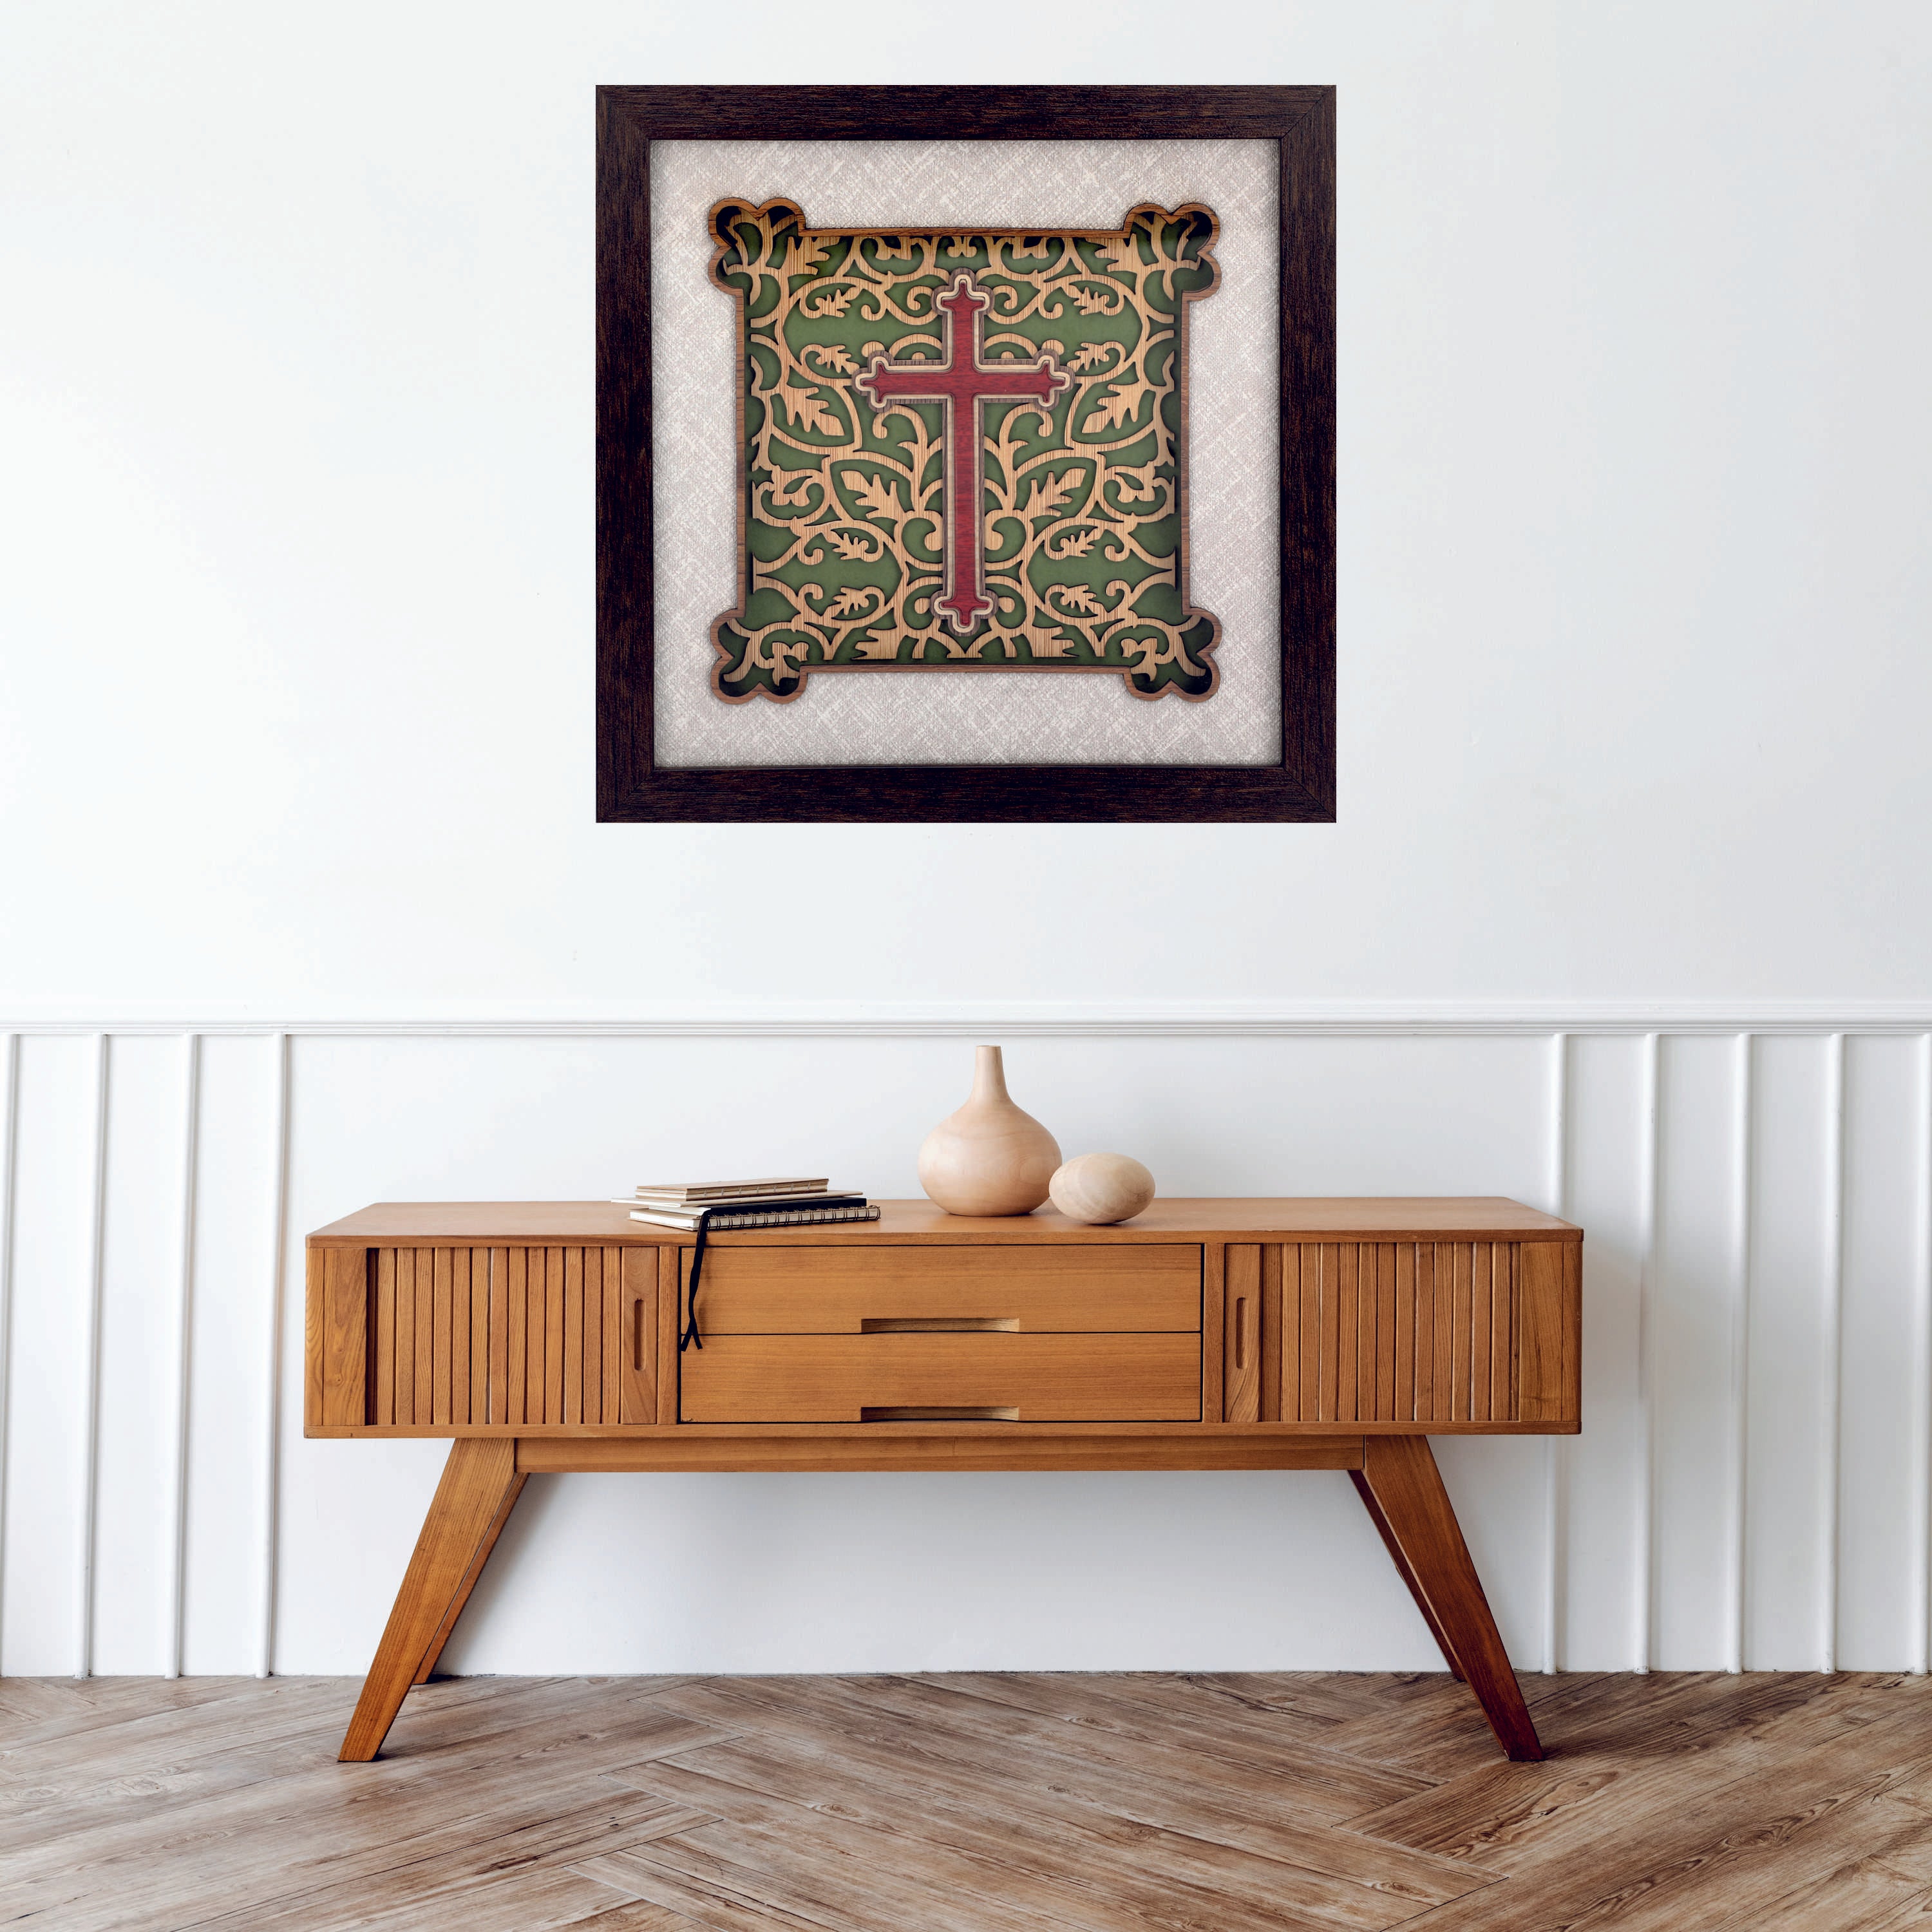 Jesus Cross - 3d Wooden Layer Frame